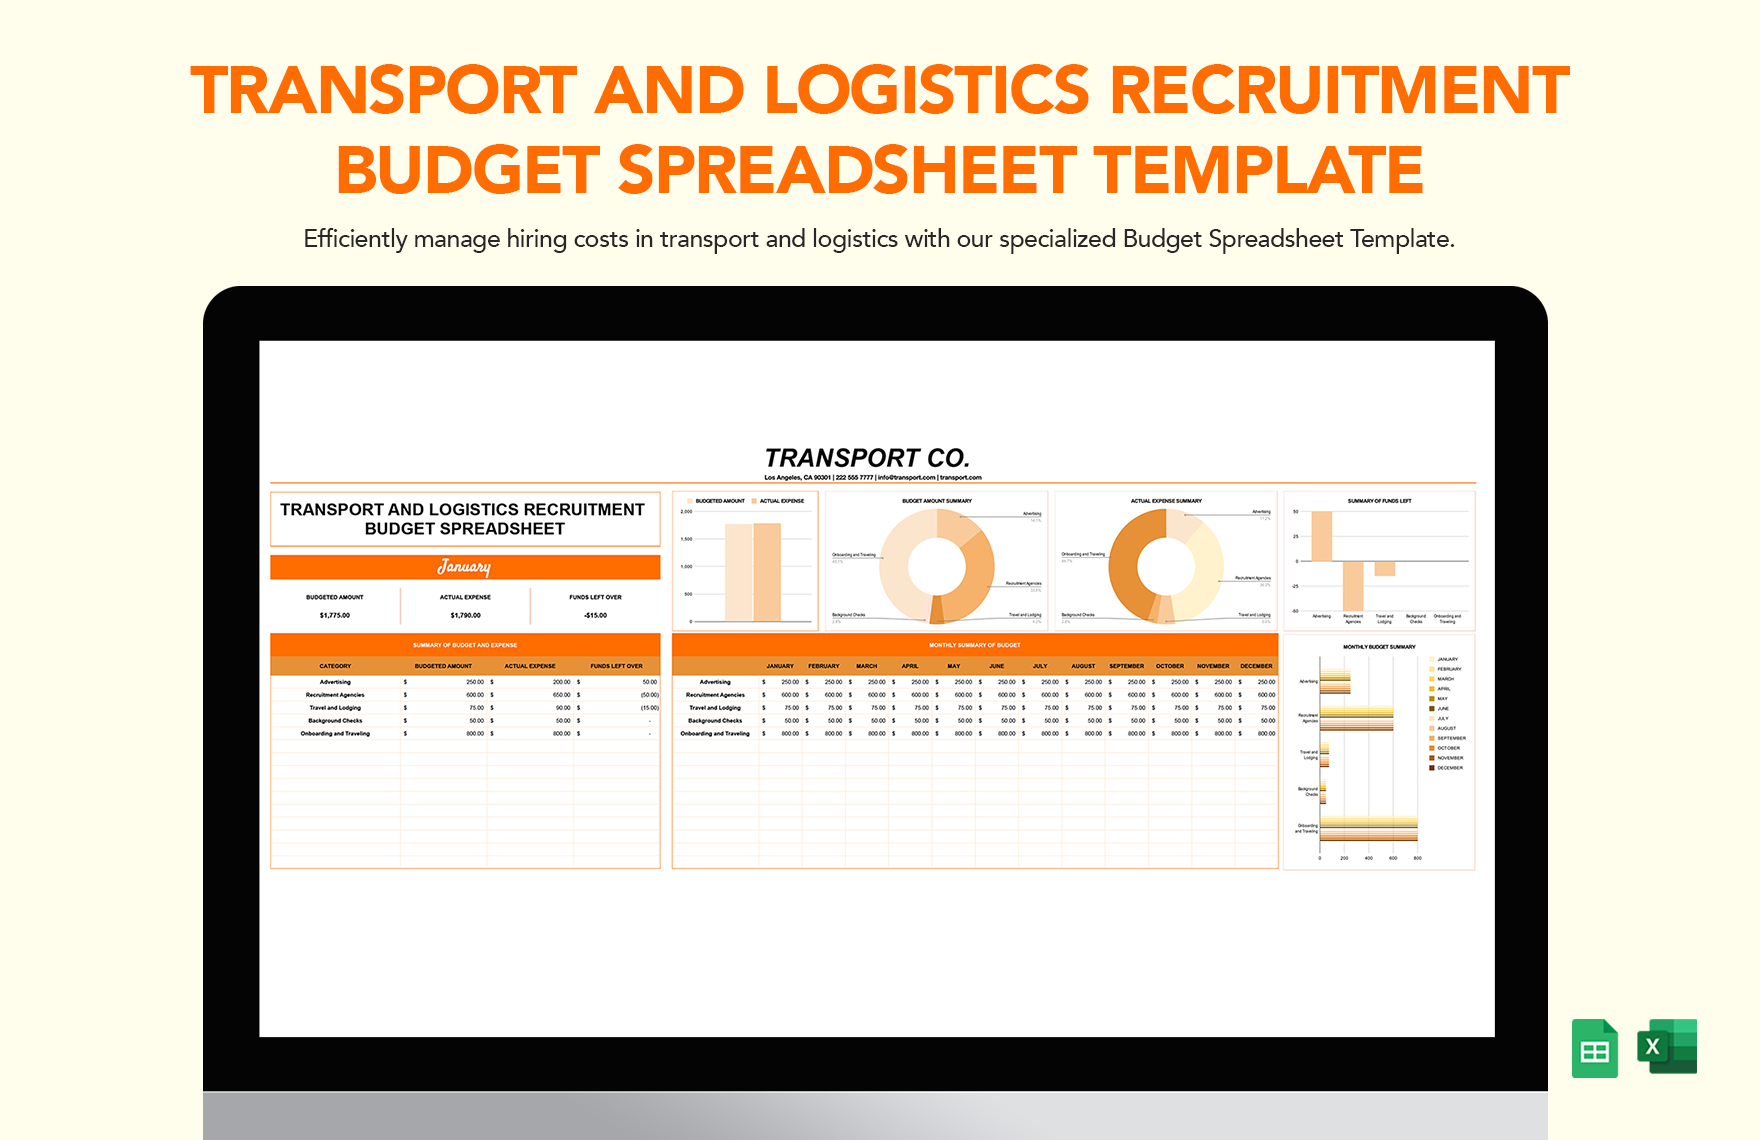 Transport and Logistics Recruitment Budget Spreadsheet Template